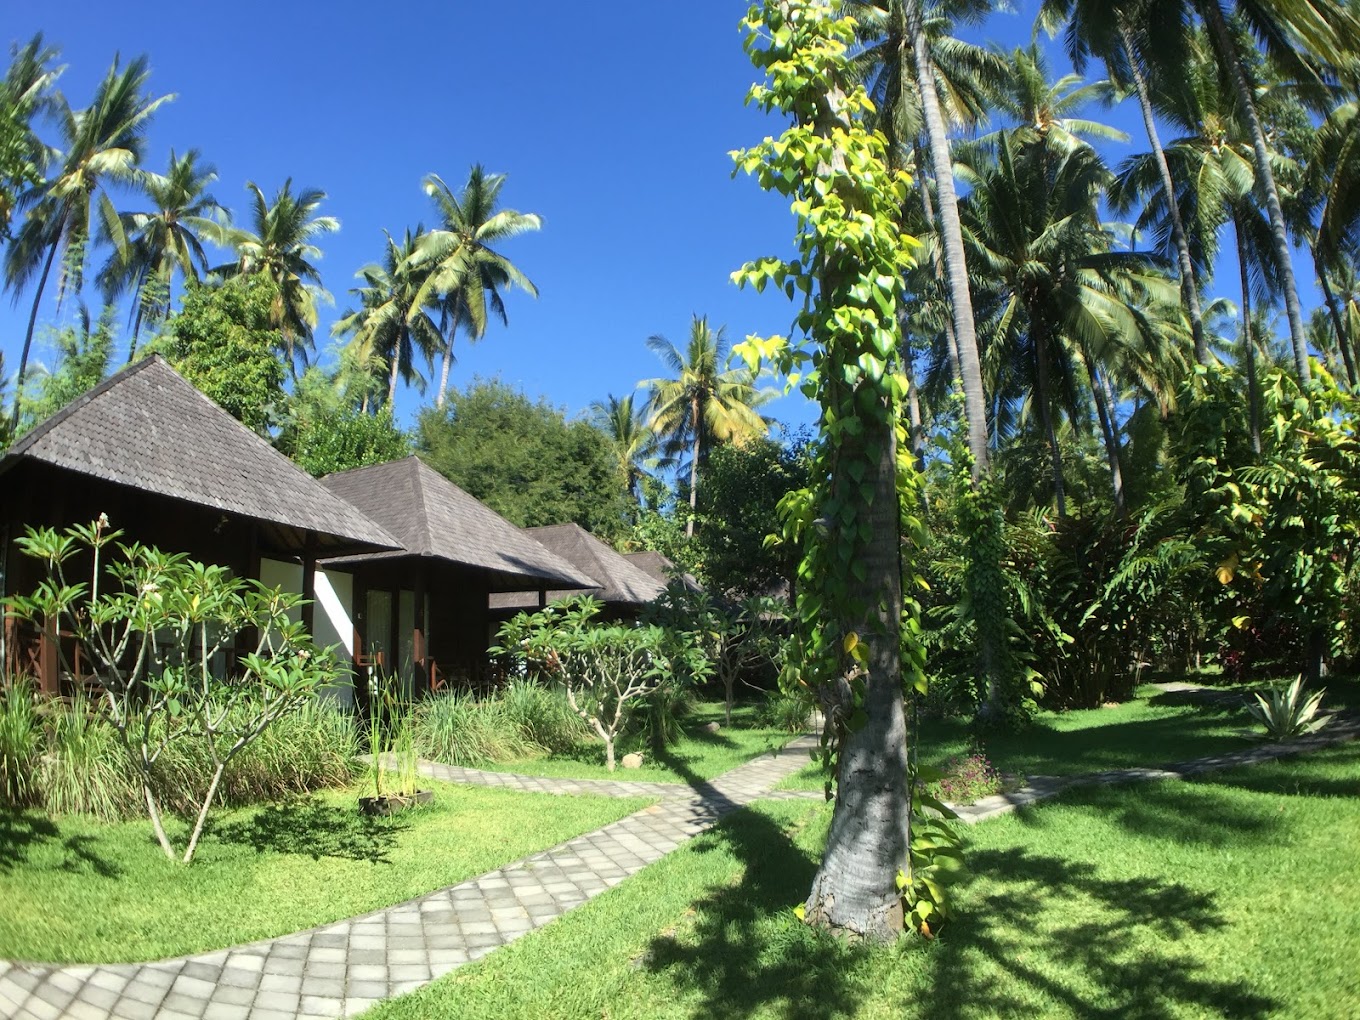 Bali Au Naturel Beach Resort